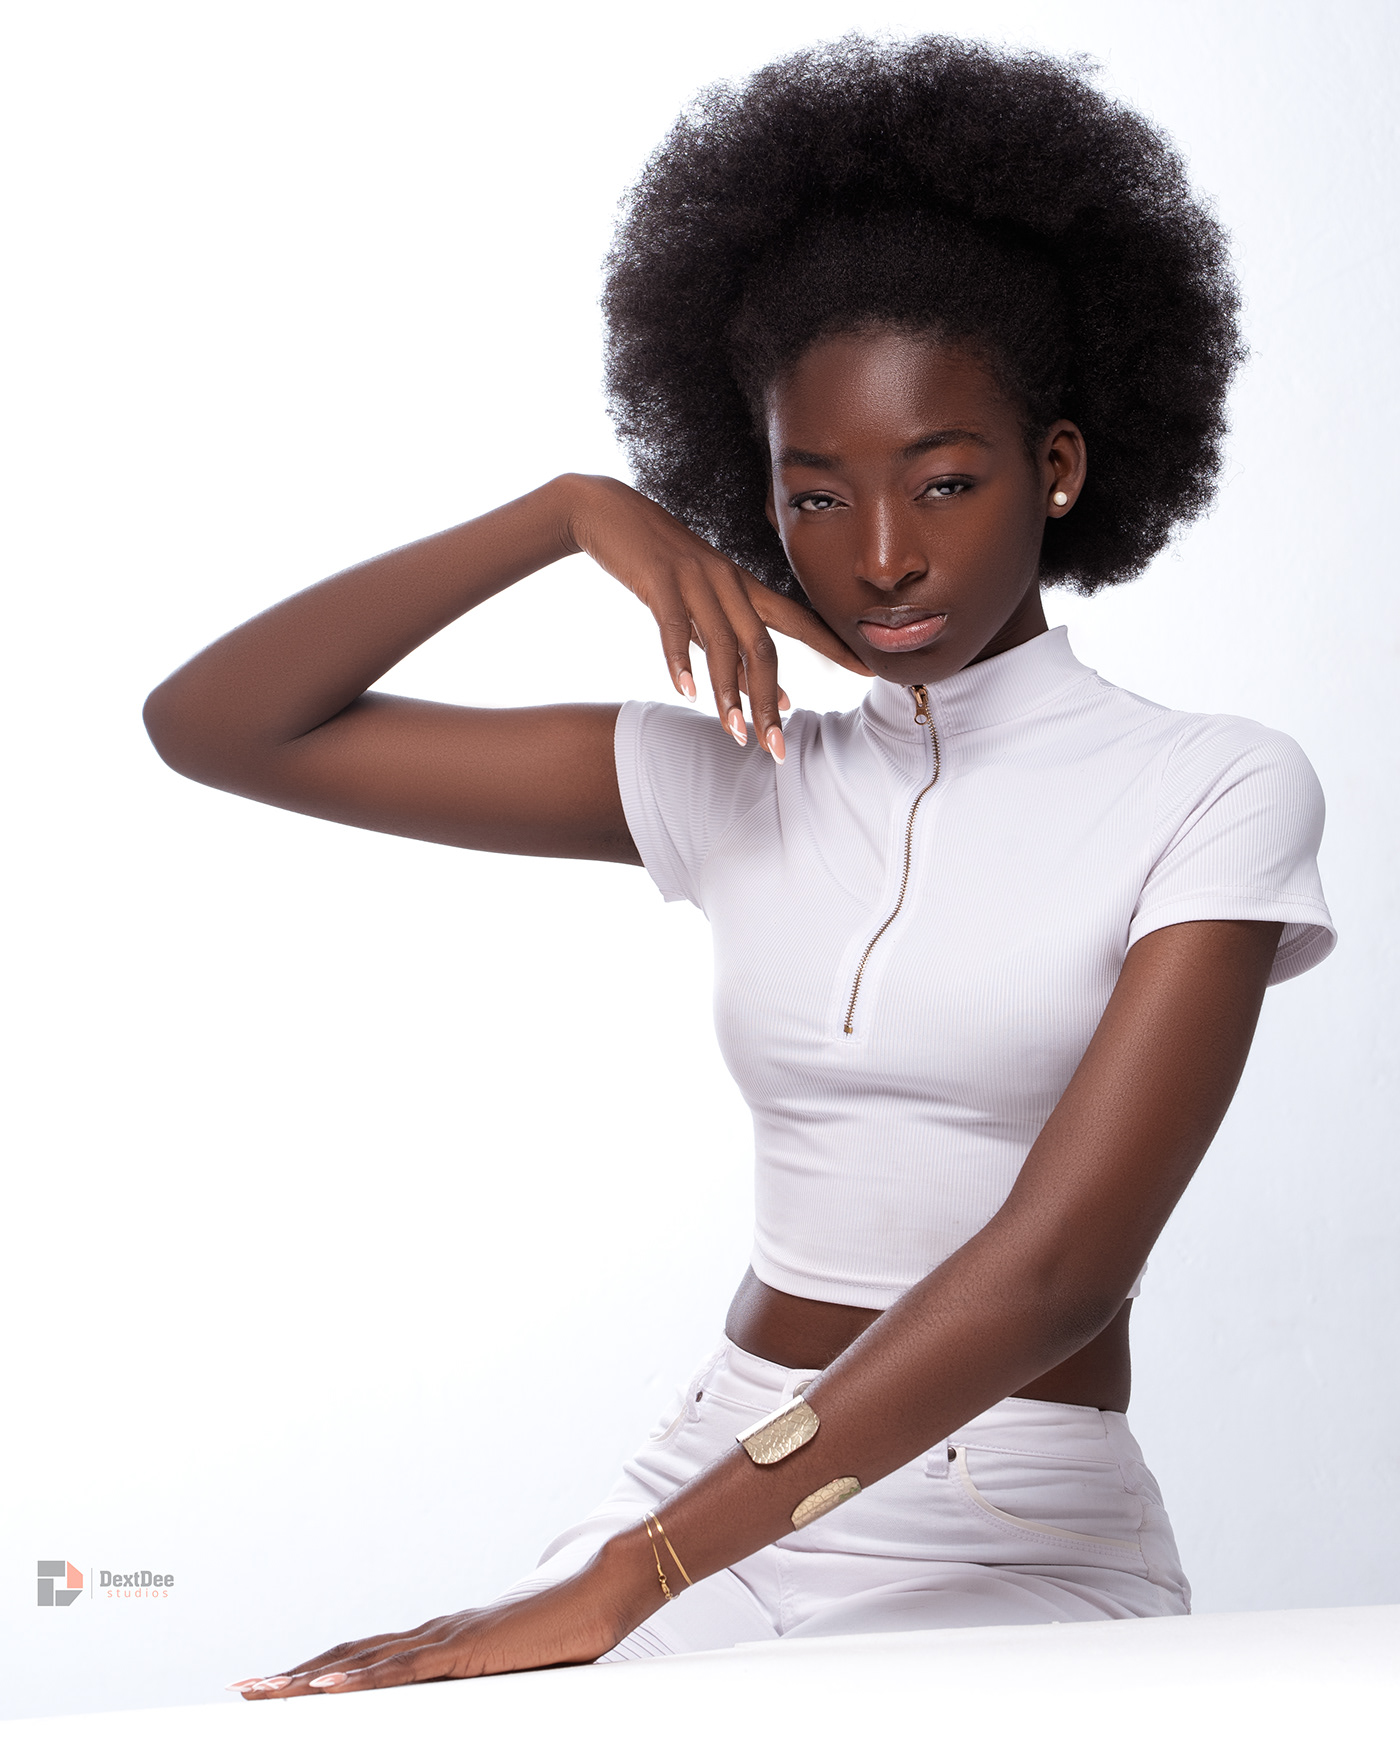 DextDee Studios all white afro Ghana Test Shoot retouching  edit